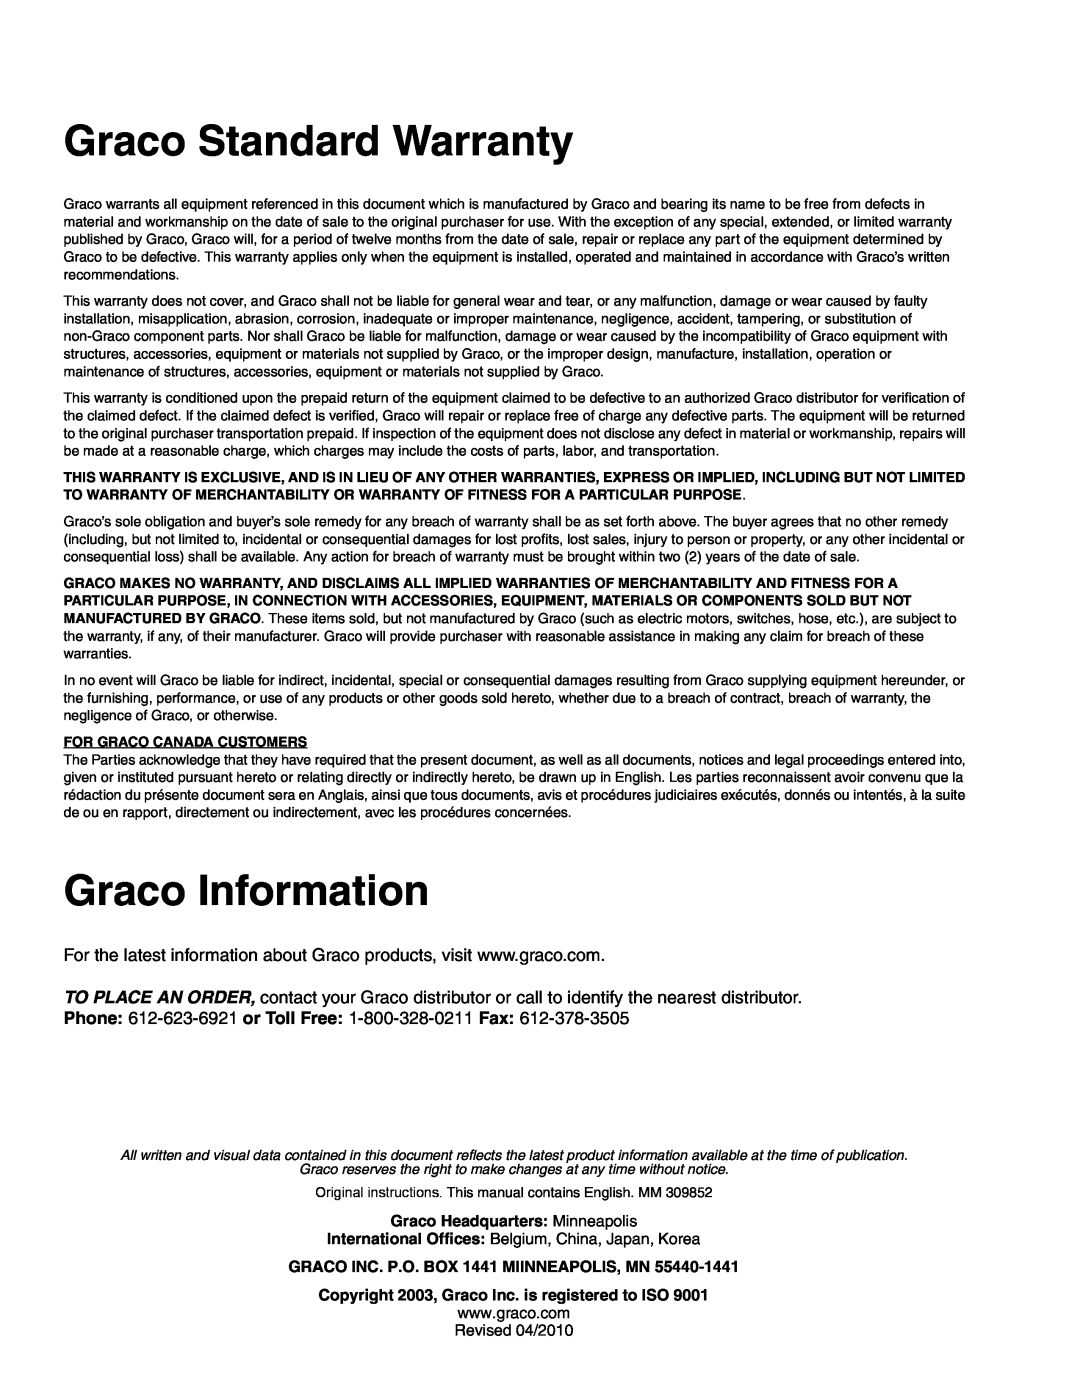 Graco 24D106, 246978, 24E379 Graco Standard Warranty, Graco Information, Graco Headquarters Minneapolis, Revised 04/2010 